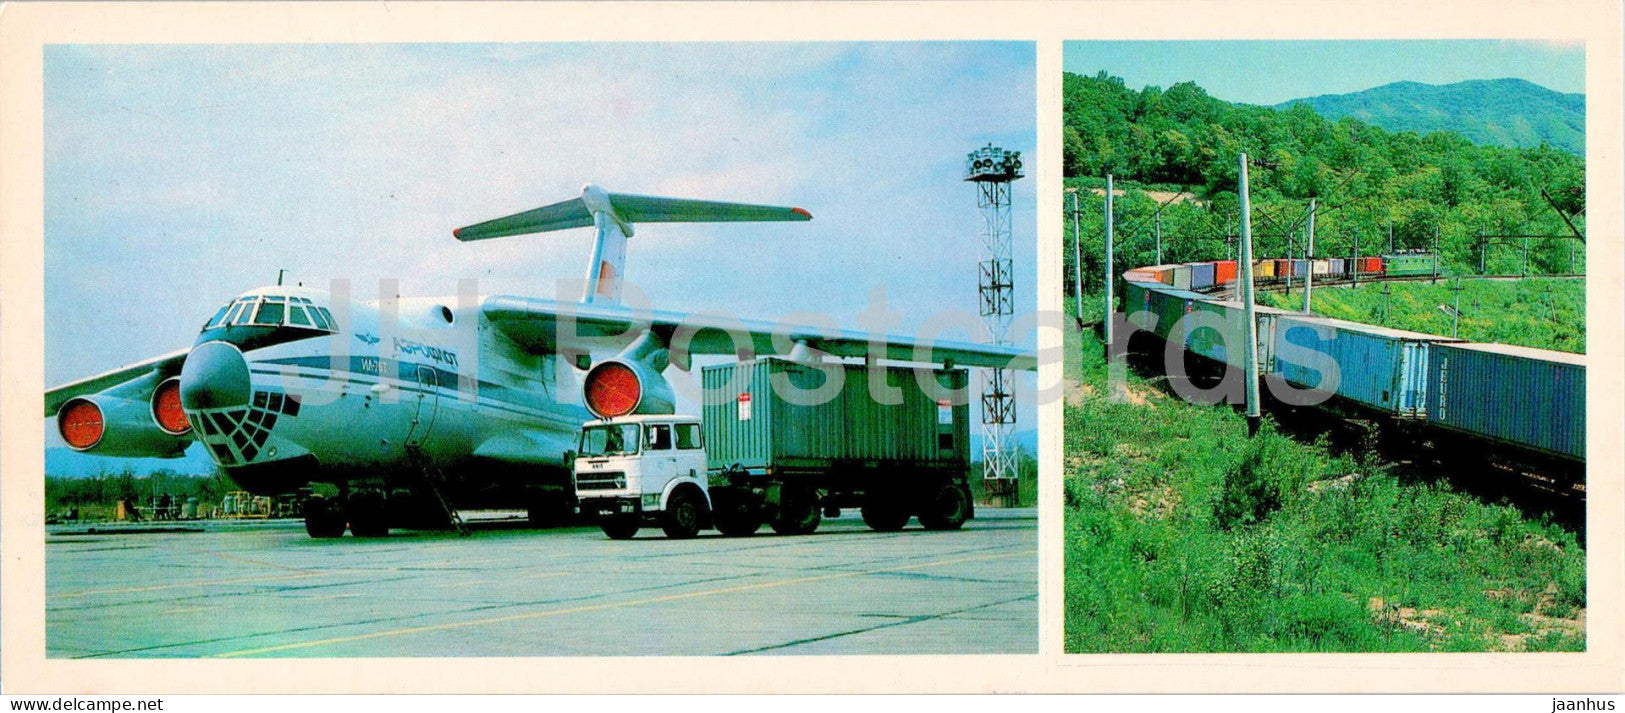 Vostochny Port (Eastern Port) - airplane Il-76T - truck - train - 1982 - Russia USSR - unused